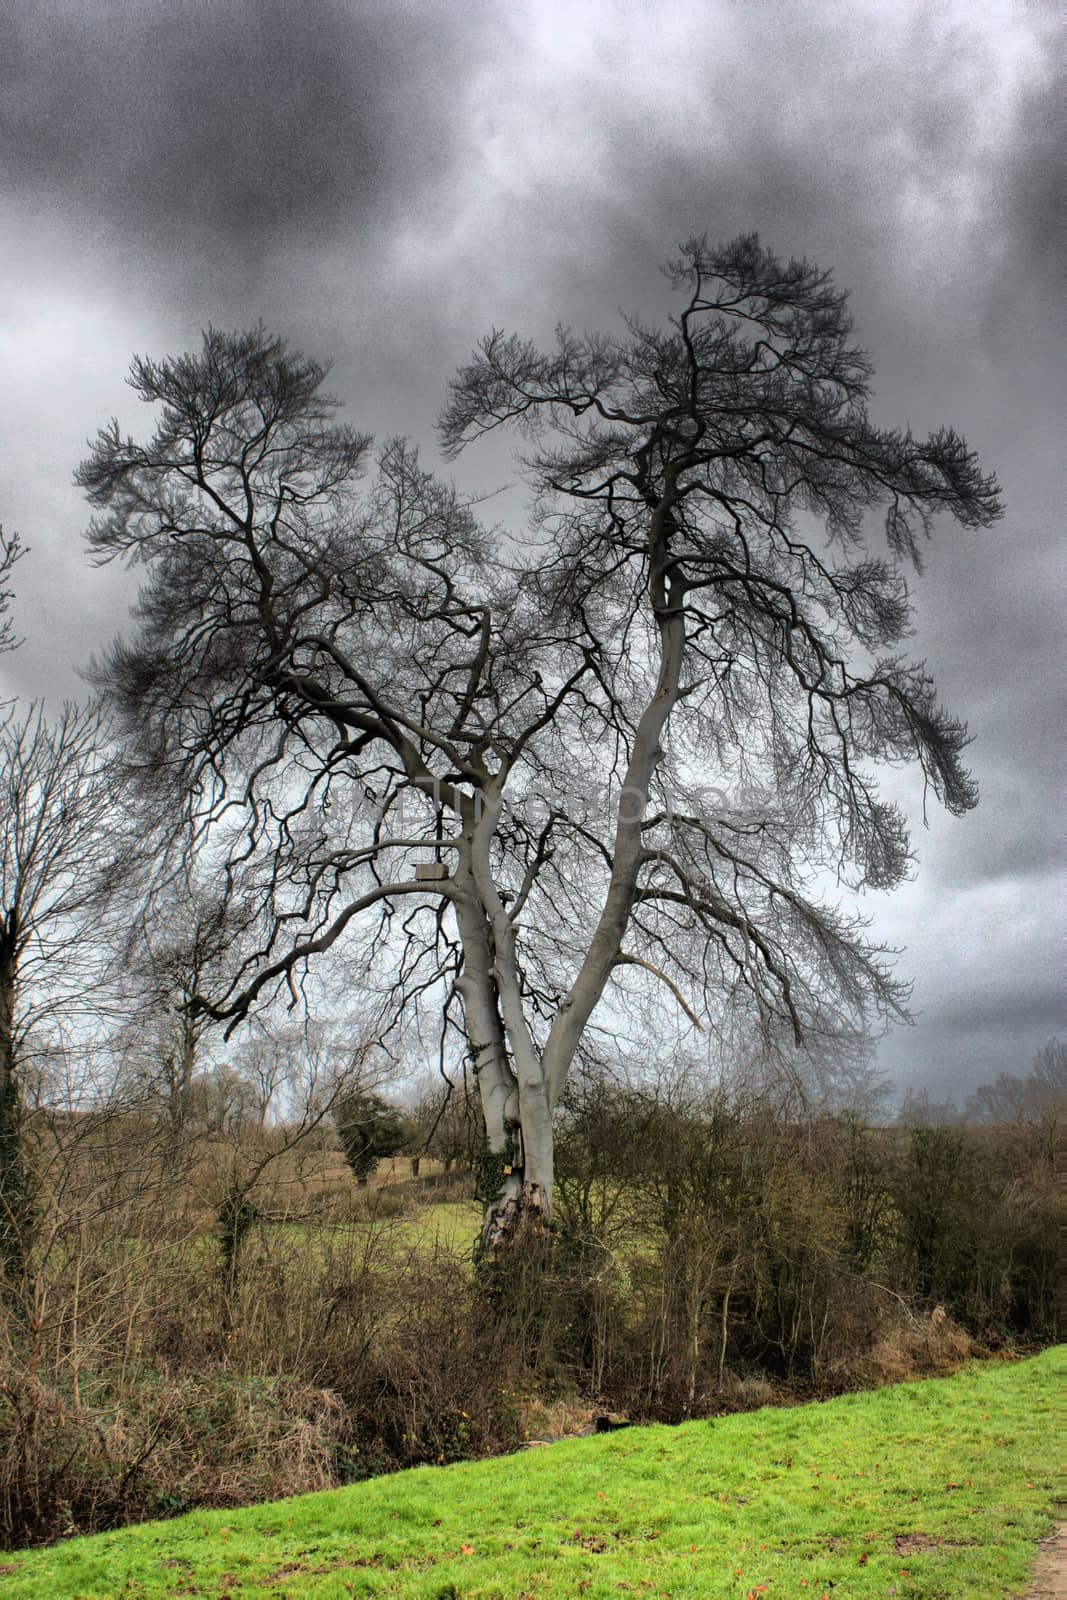 dead tree silhouette against a dark grey cloudy sky by chrisga